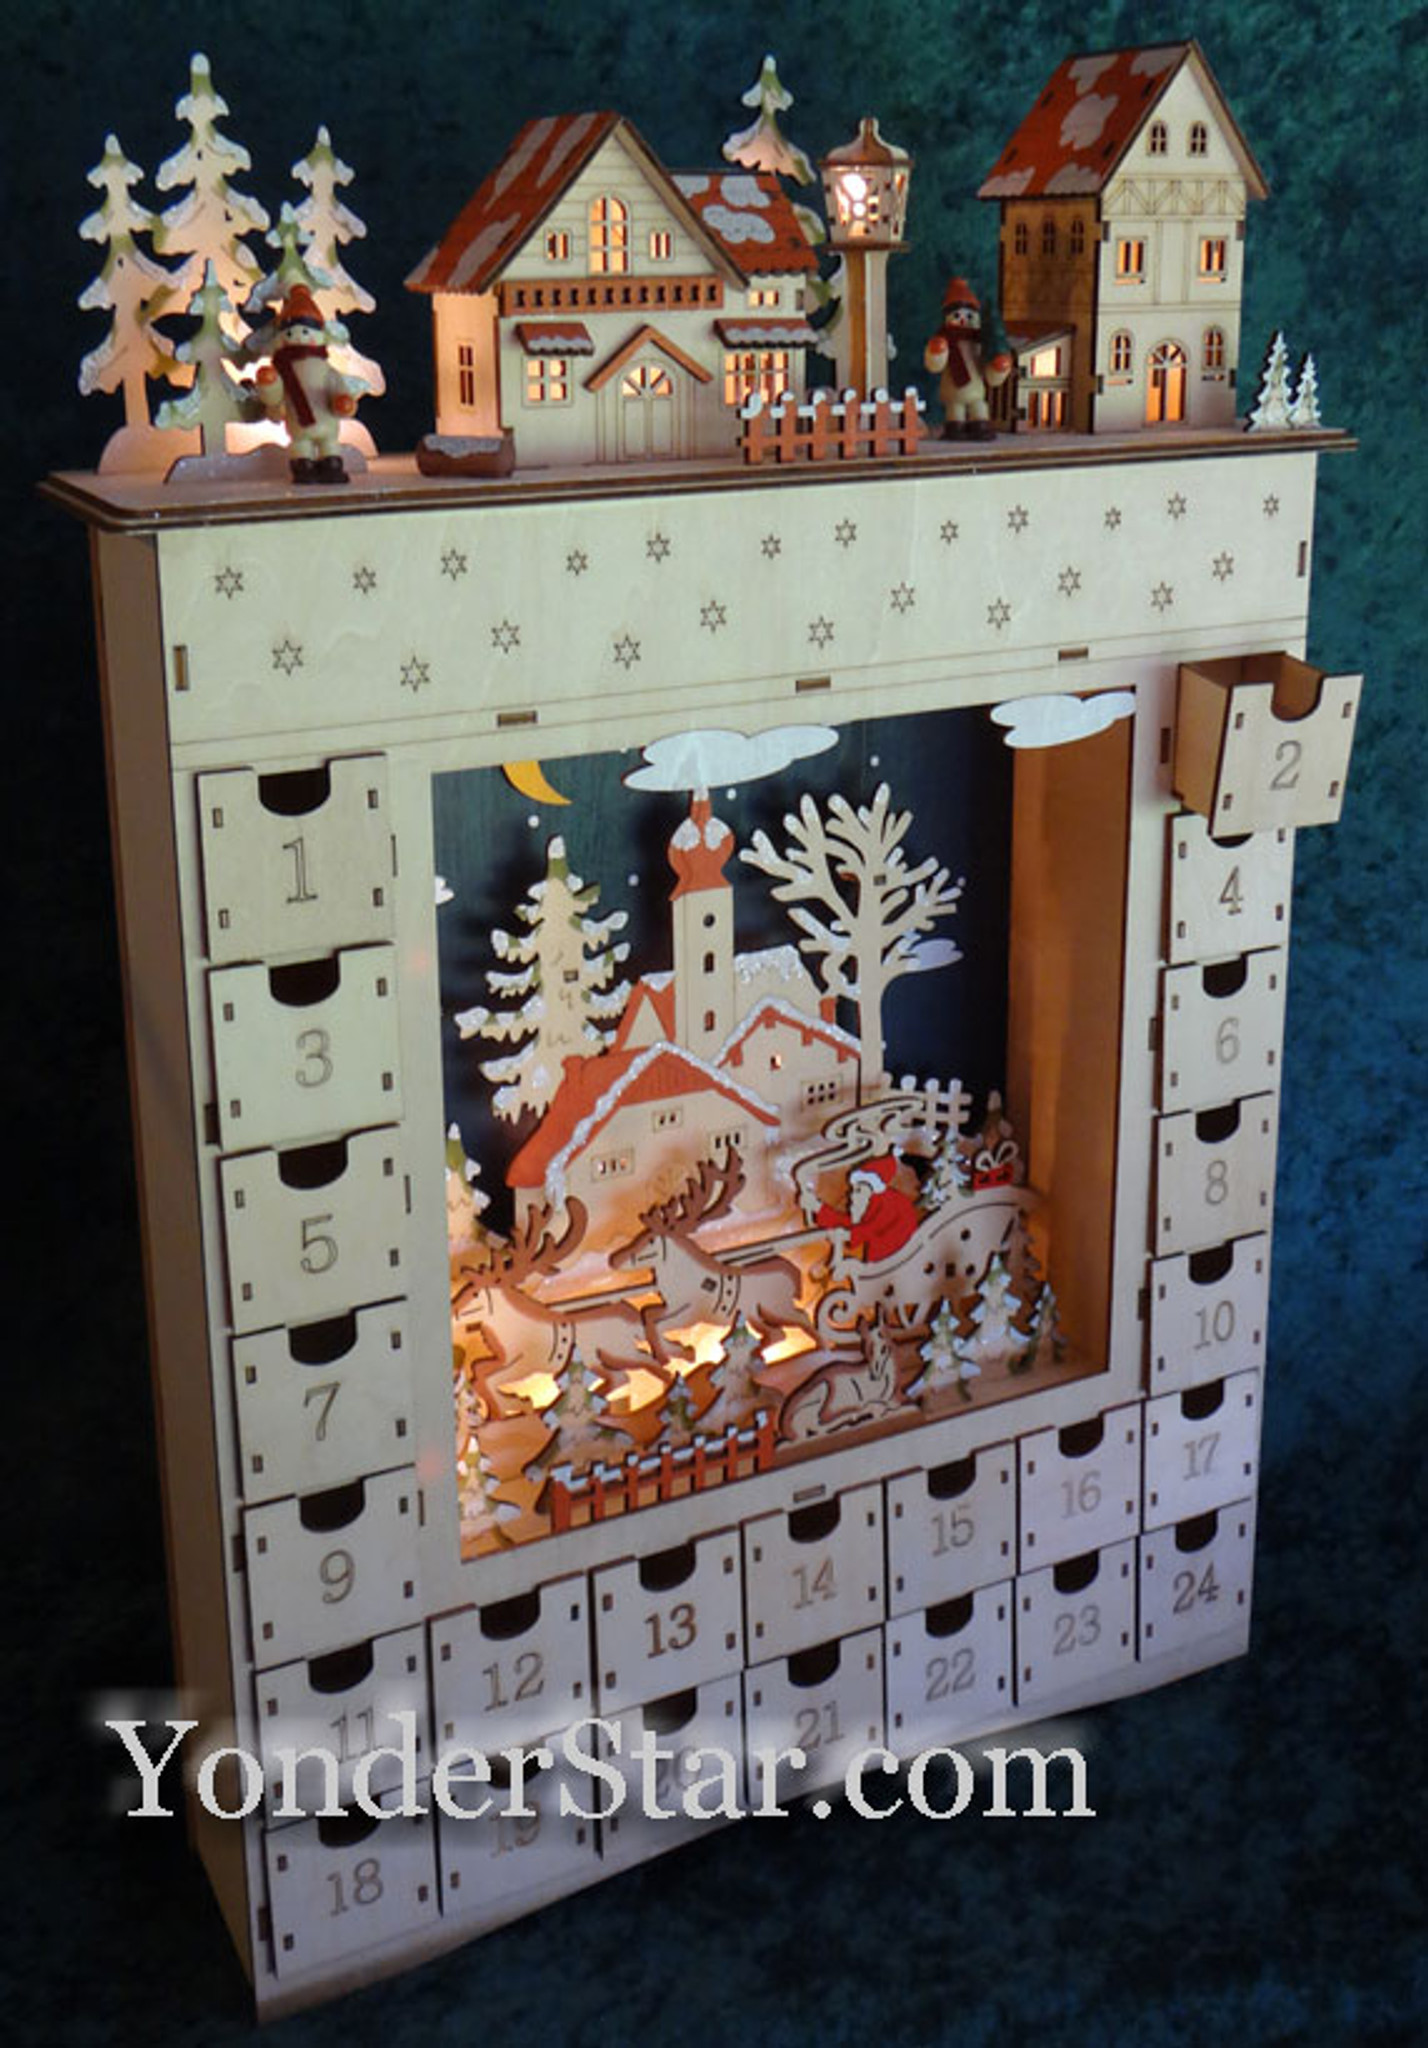 Lighted Wooden Advent Calendar PreOrder Yonder Star Christmas Shop LLC